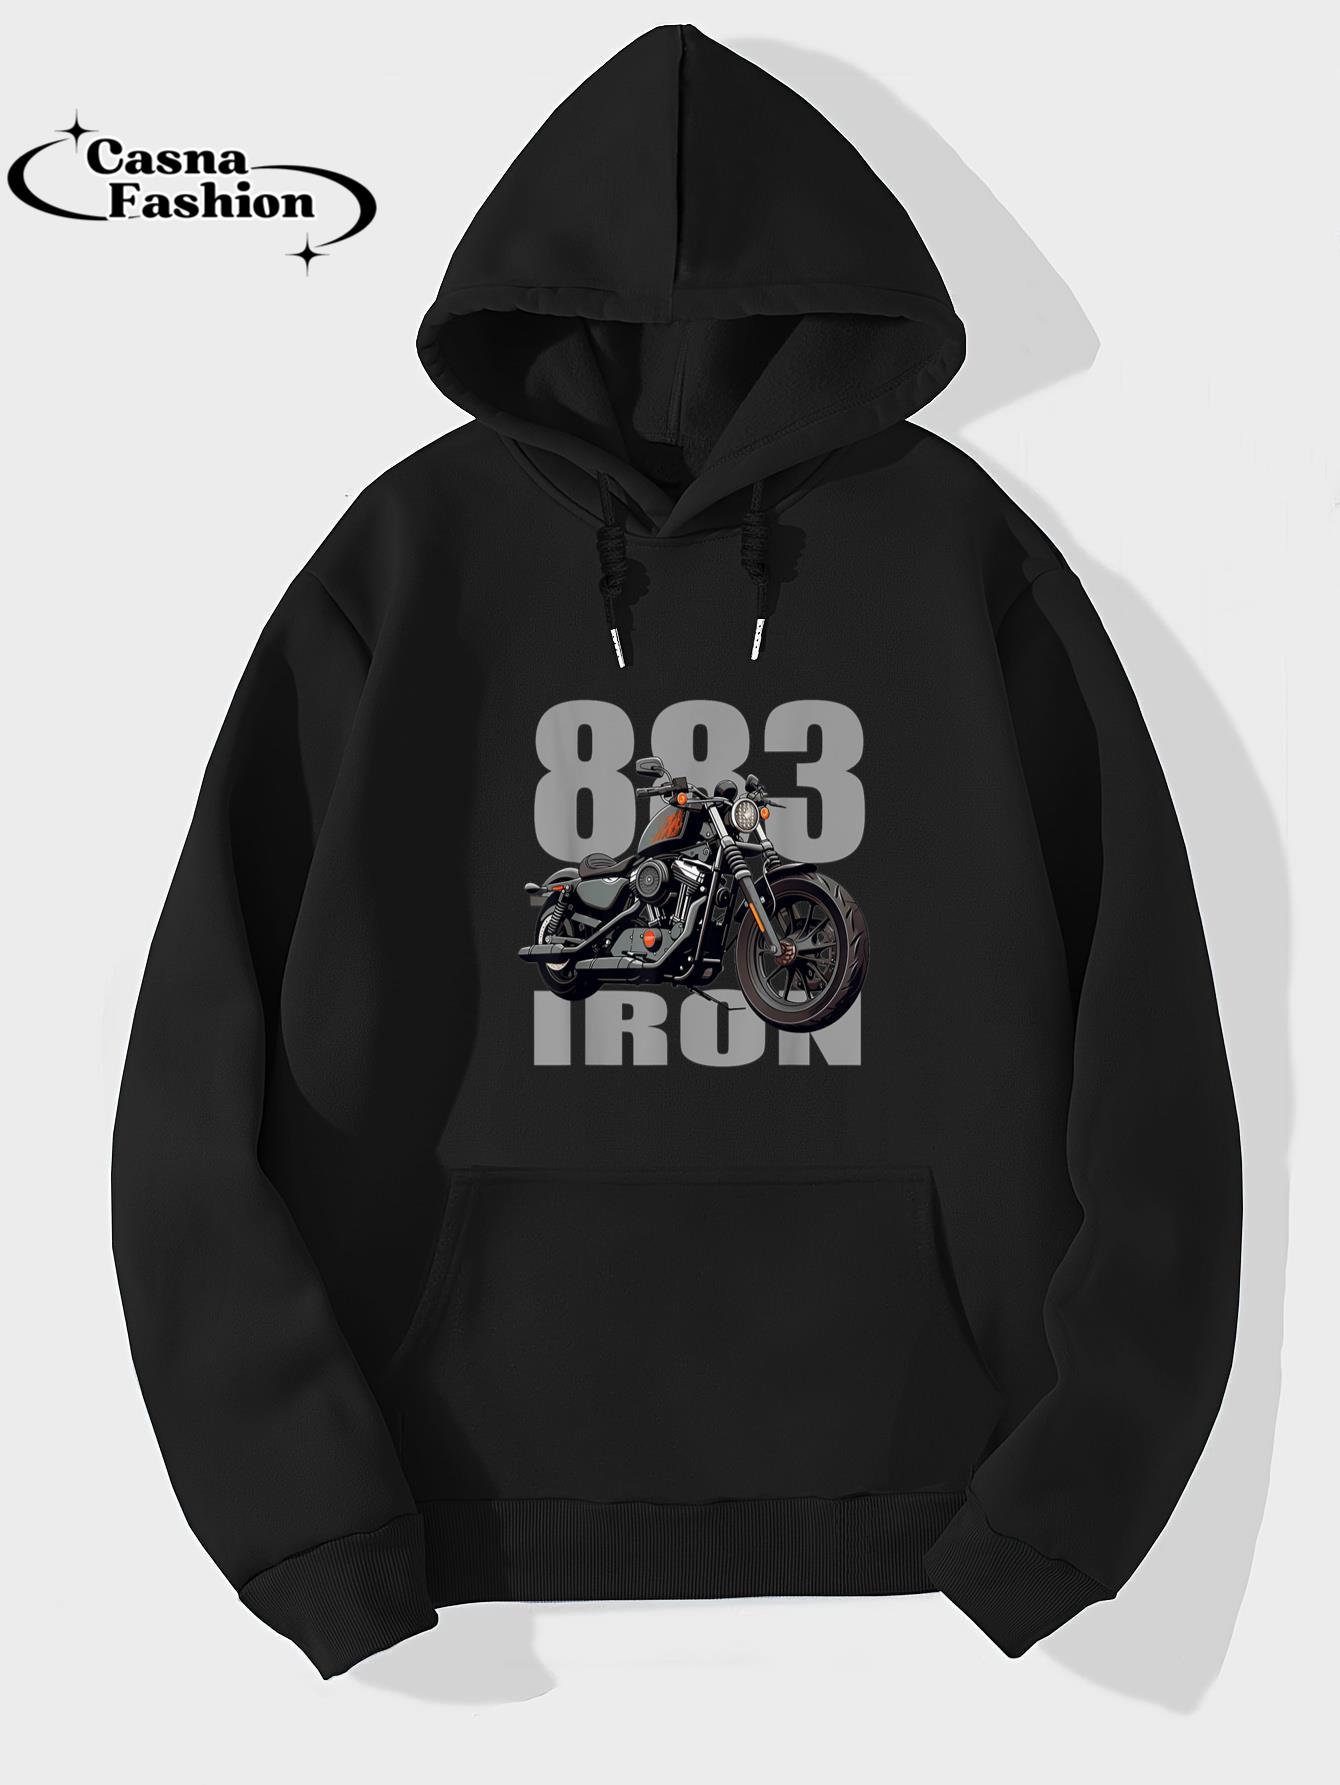 casnafashion_Hoodie_883 Iron Classic Motorcycle Biker T-Shirt_hoodie_black hoodie